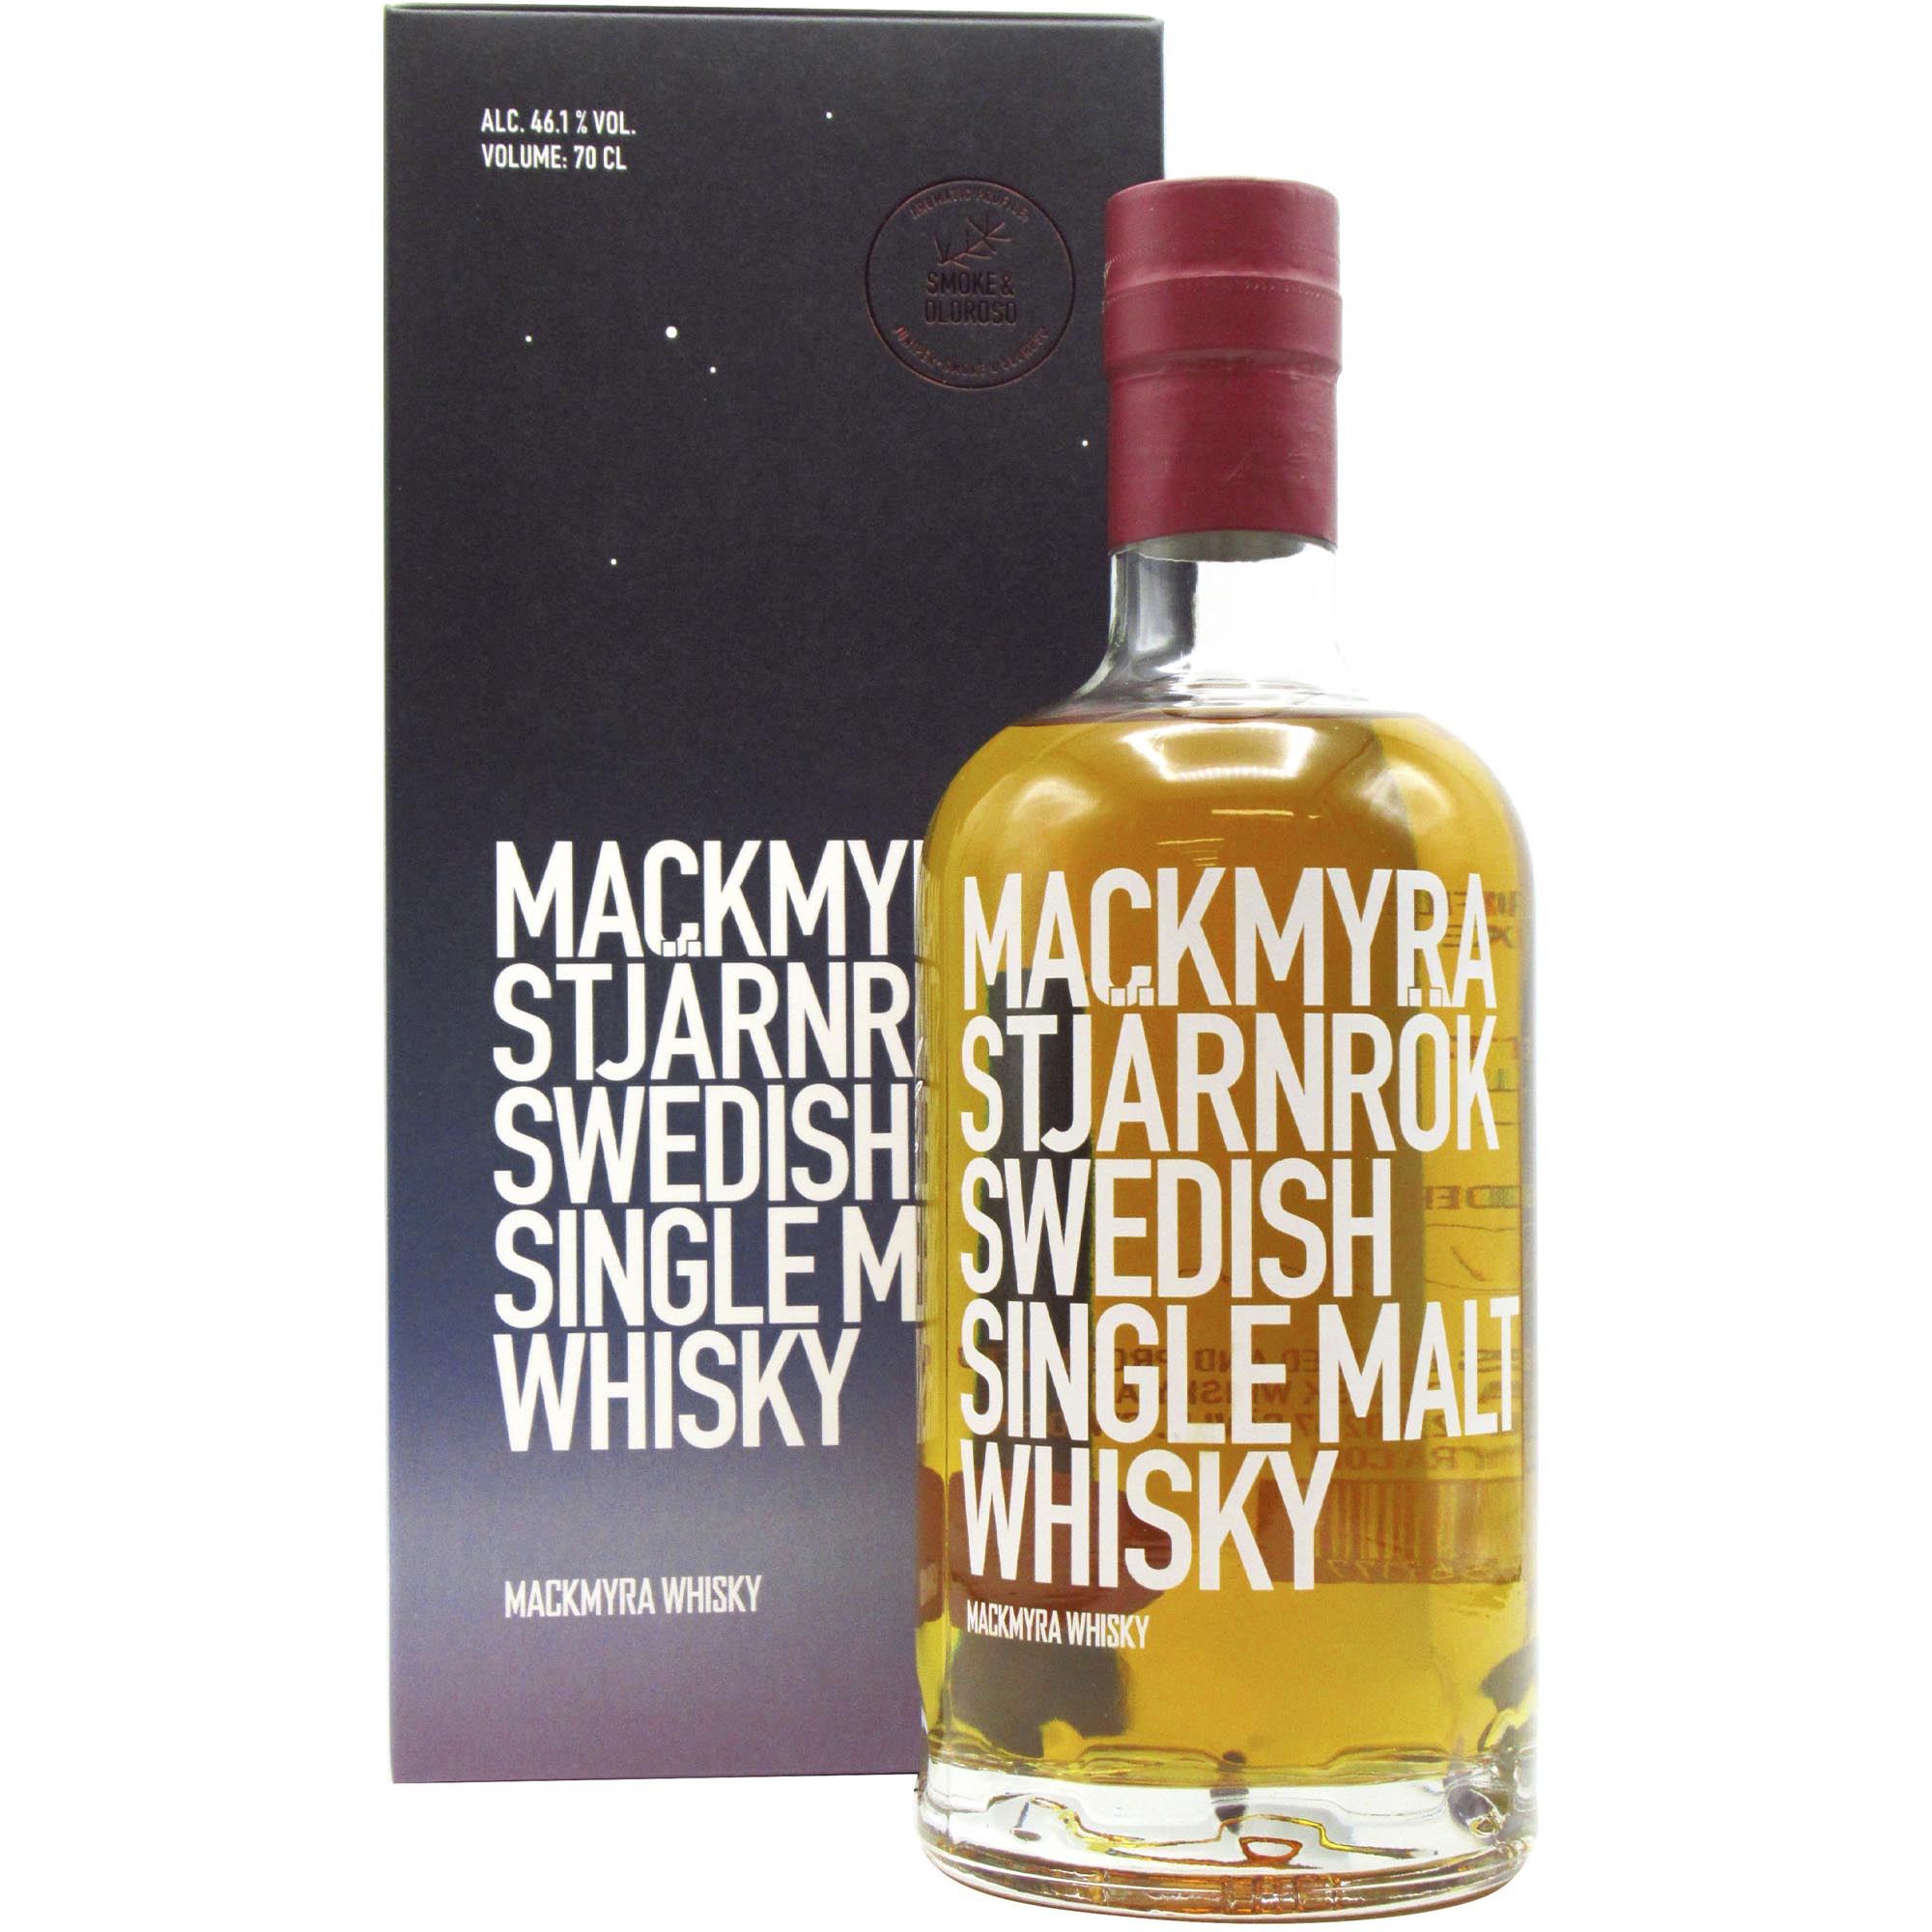 Виски Mackmyra Stjarnrok Single Malt Swedish Whisky 46,1% 0.7 л - фото 1